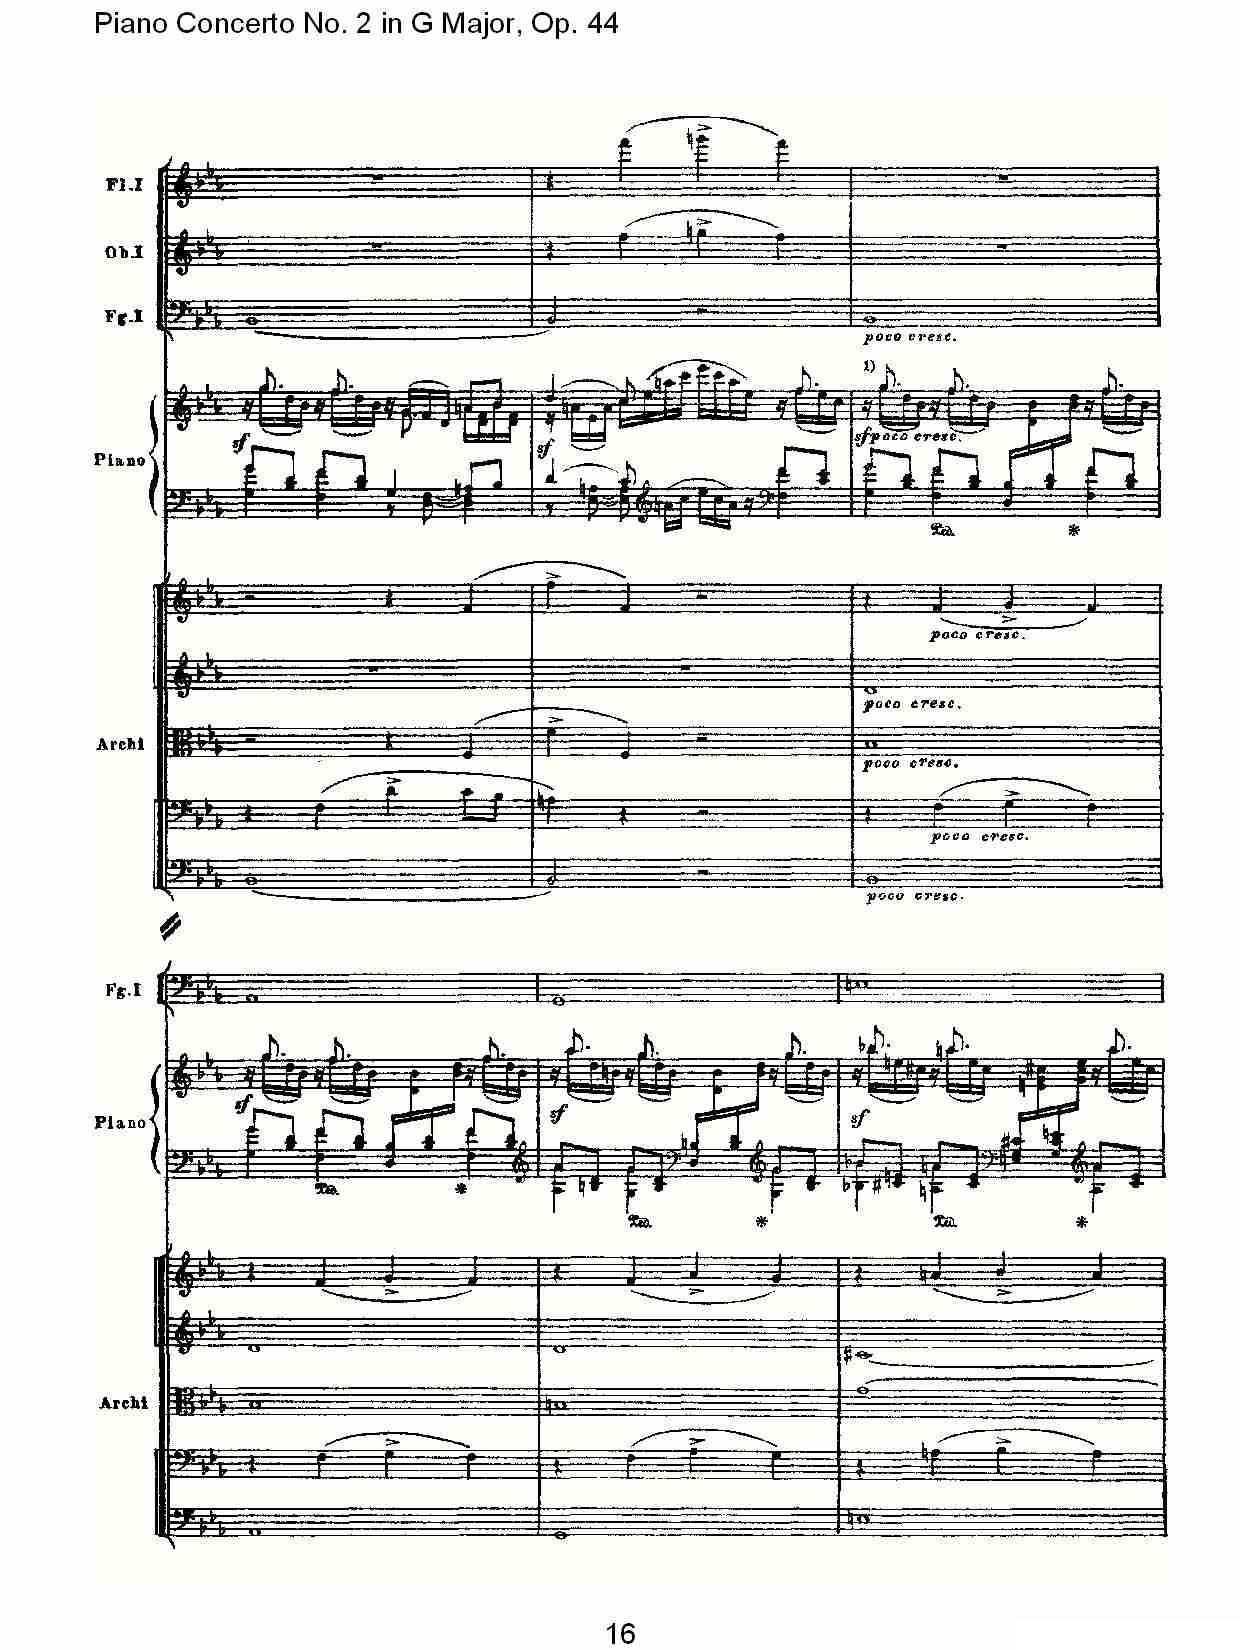 G大调第二钢琴协奏曲, Op.44第一乐章（一）钢琴曲谱（图16）